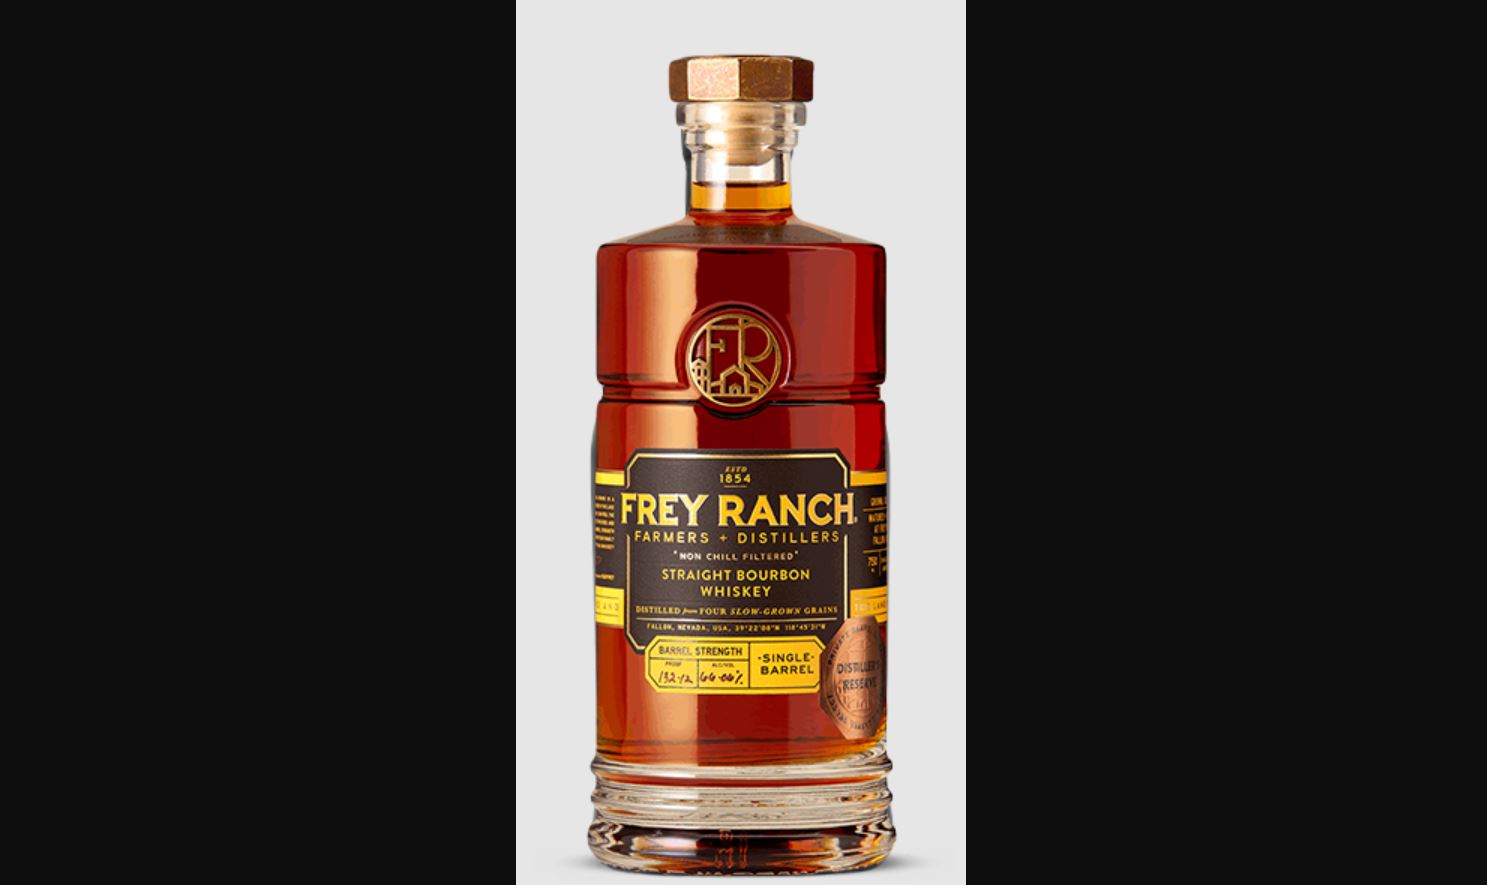 Frey Ranch Single Barrel Bourbon